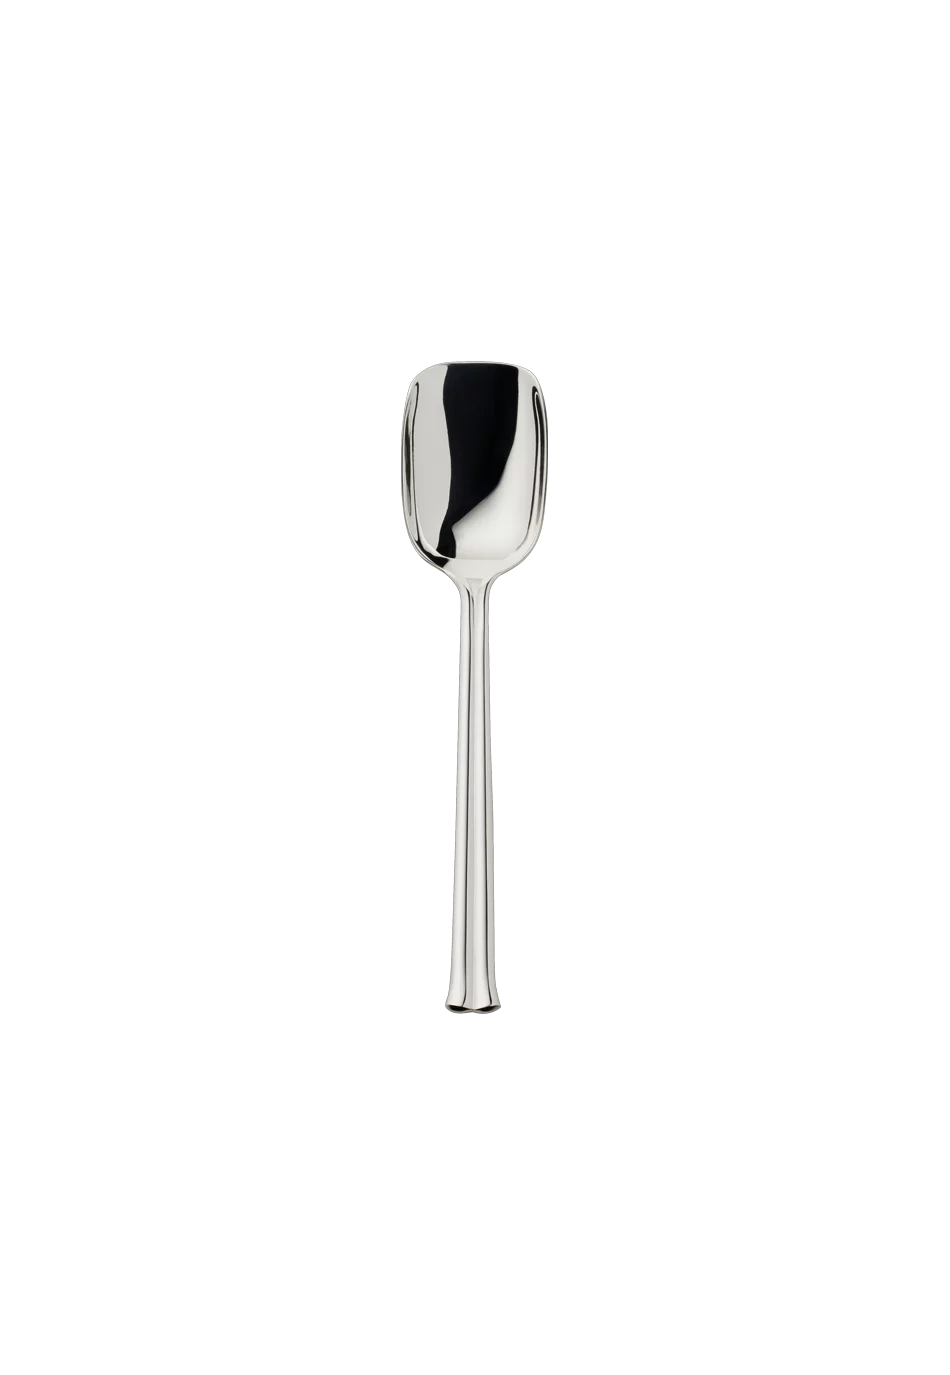 Viva Sugar Spoon (925 Sterling Silver)